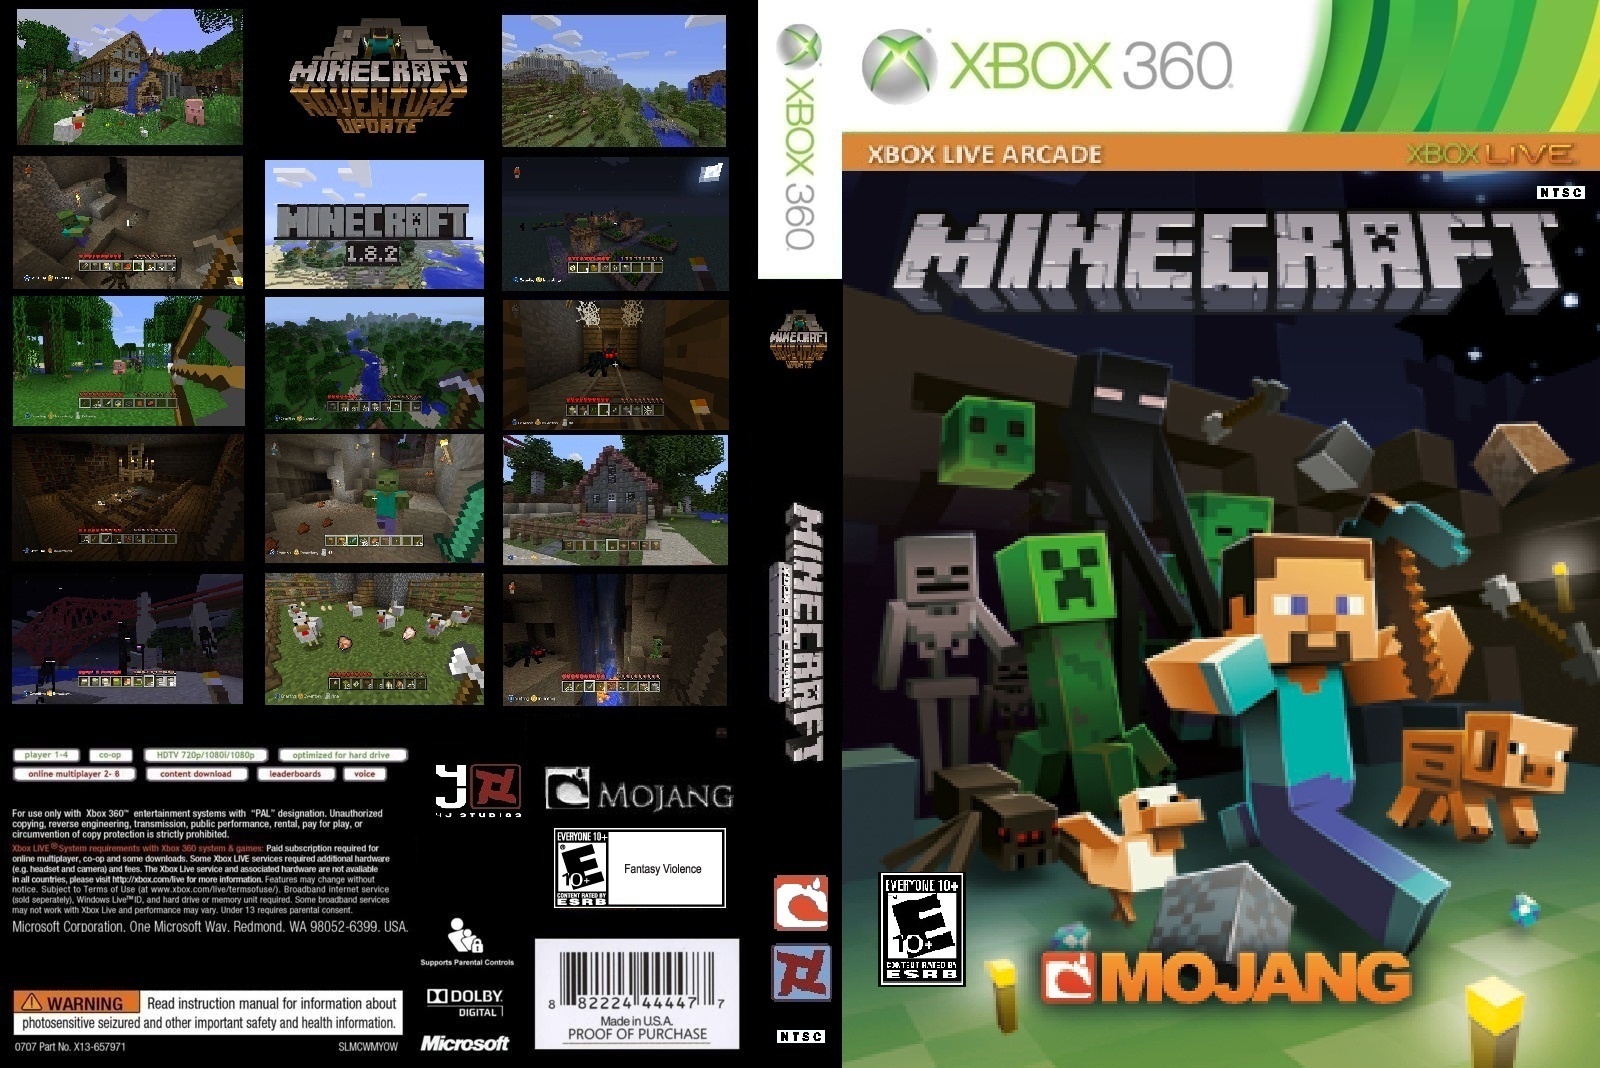 Minecraft: Xbox 360 Edition (Adventure Update) box cover